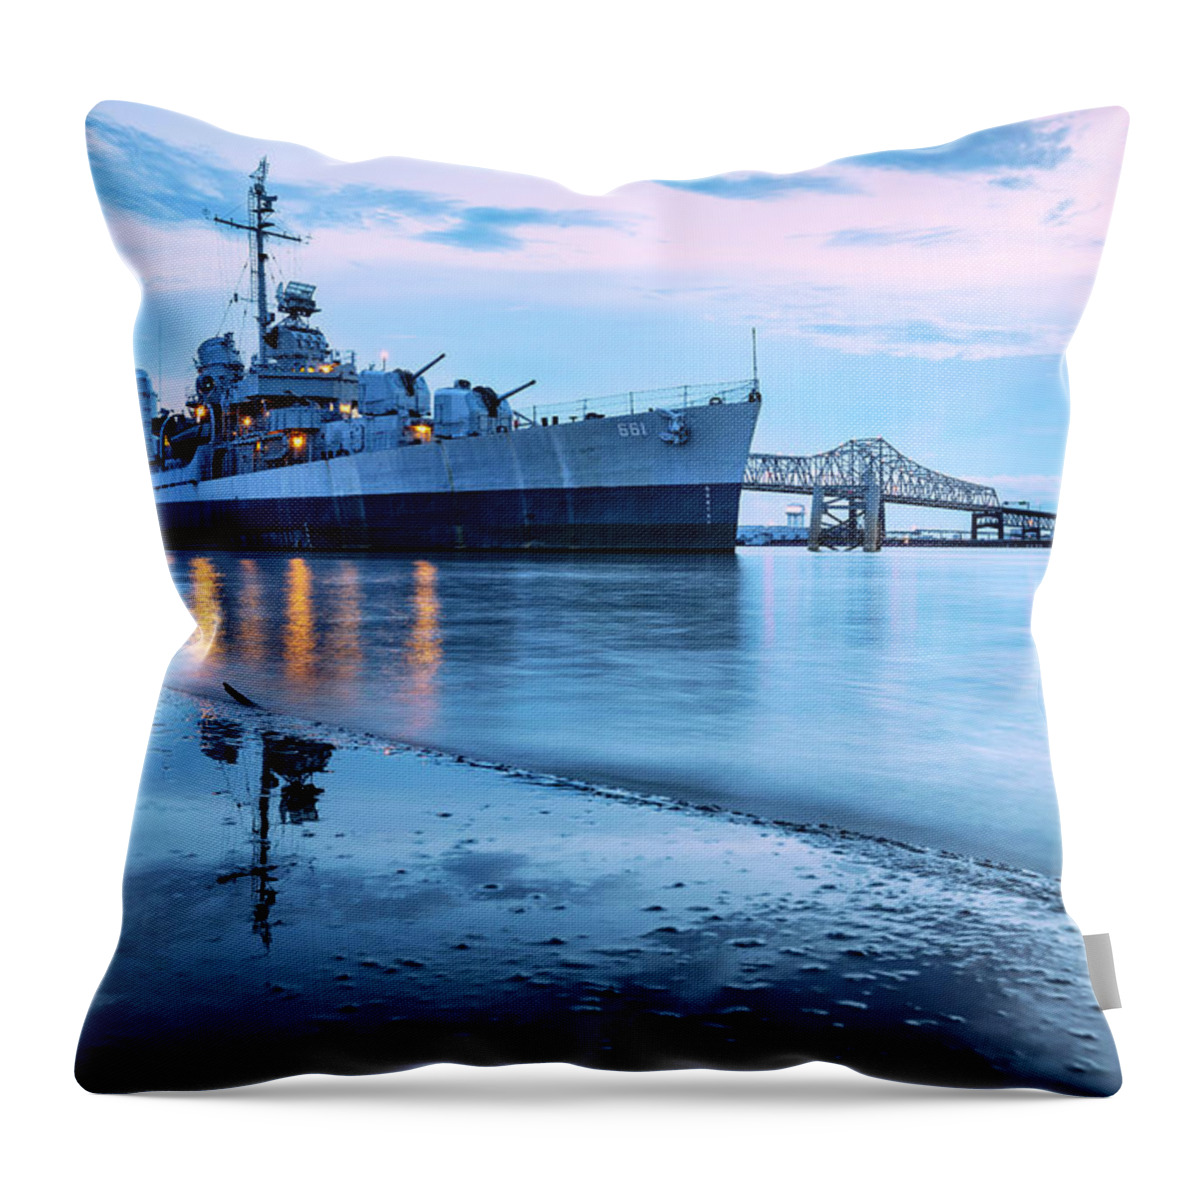 Estock Throw Pillow featuring the digital art Museum Ship, Baton Rouge, La #1 by Claudia Uripos